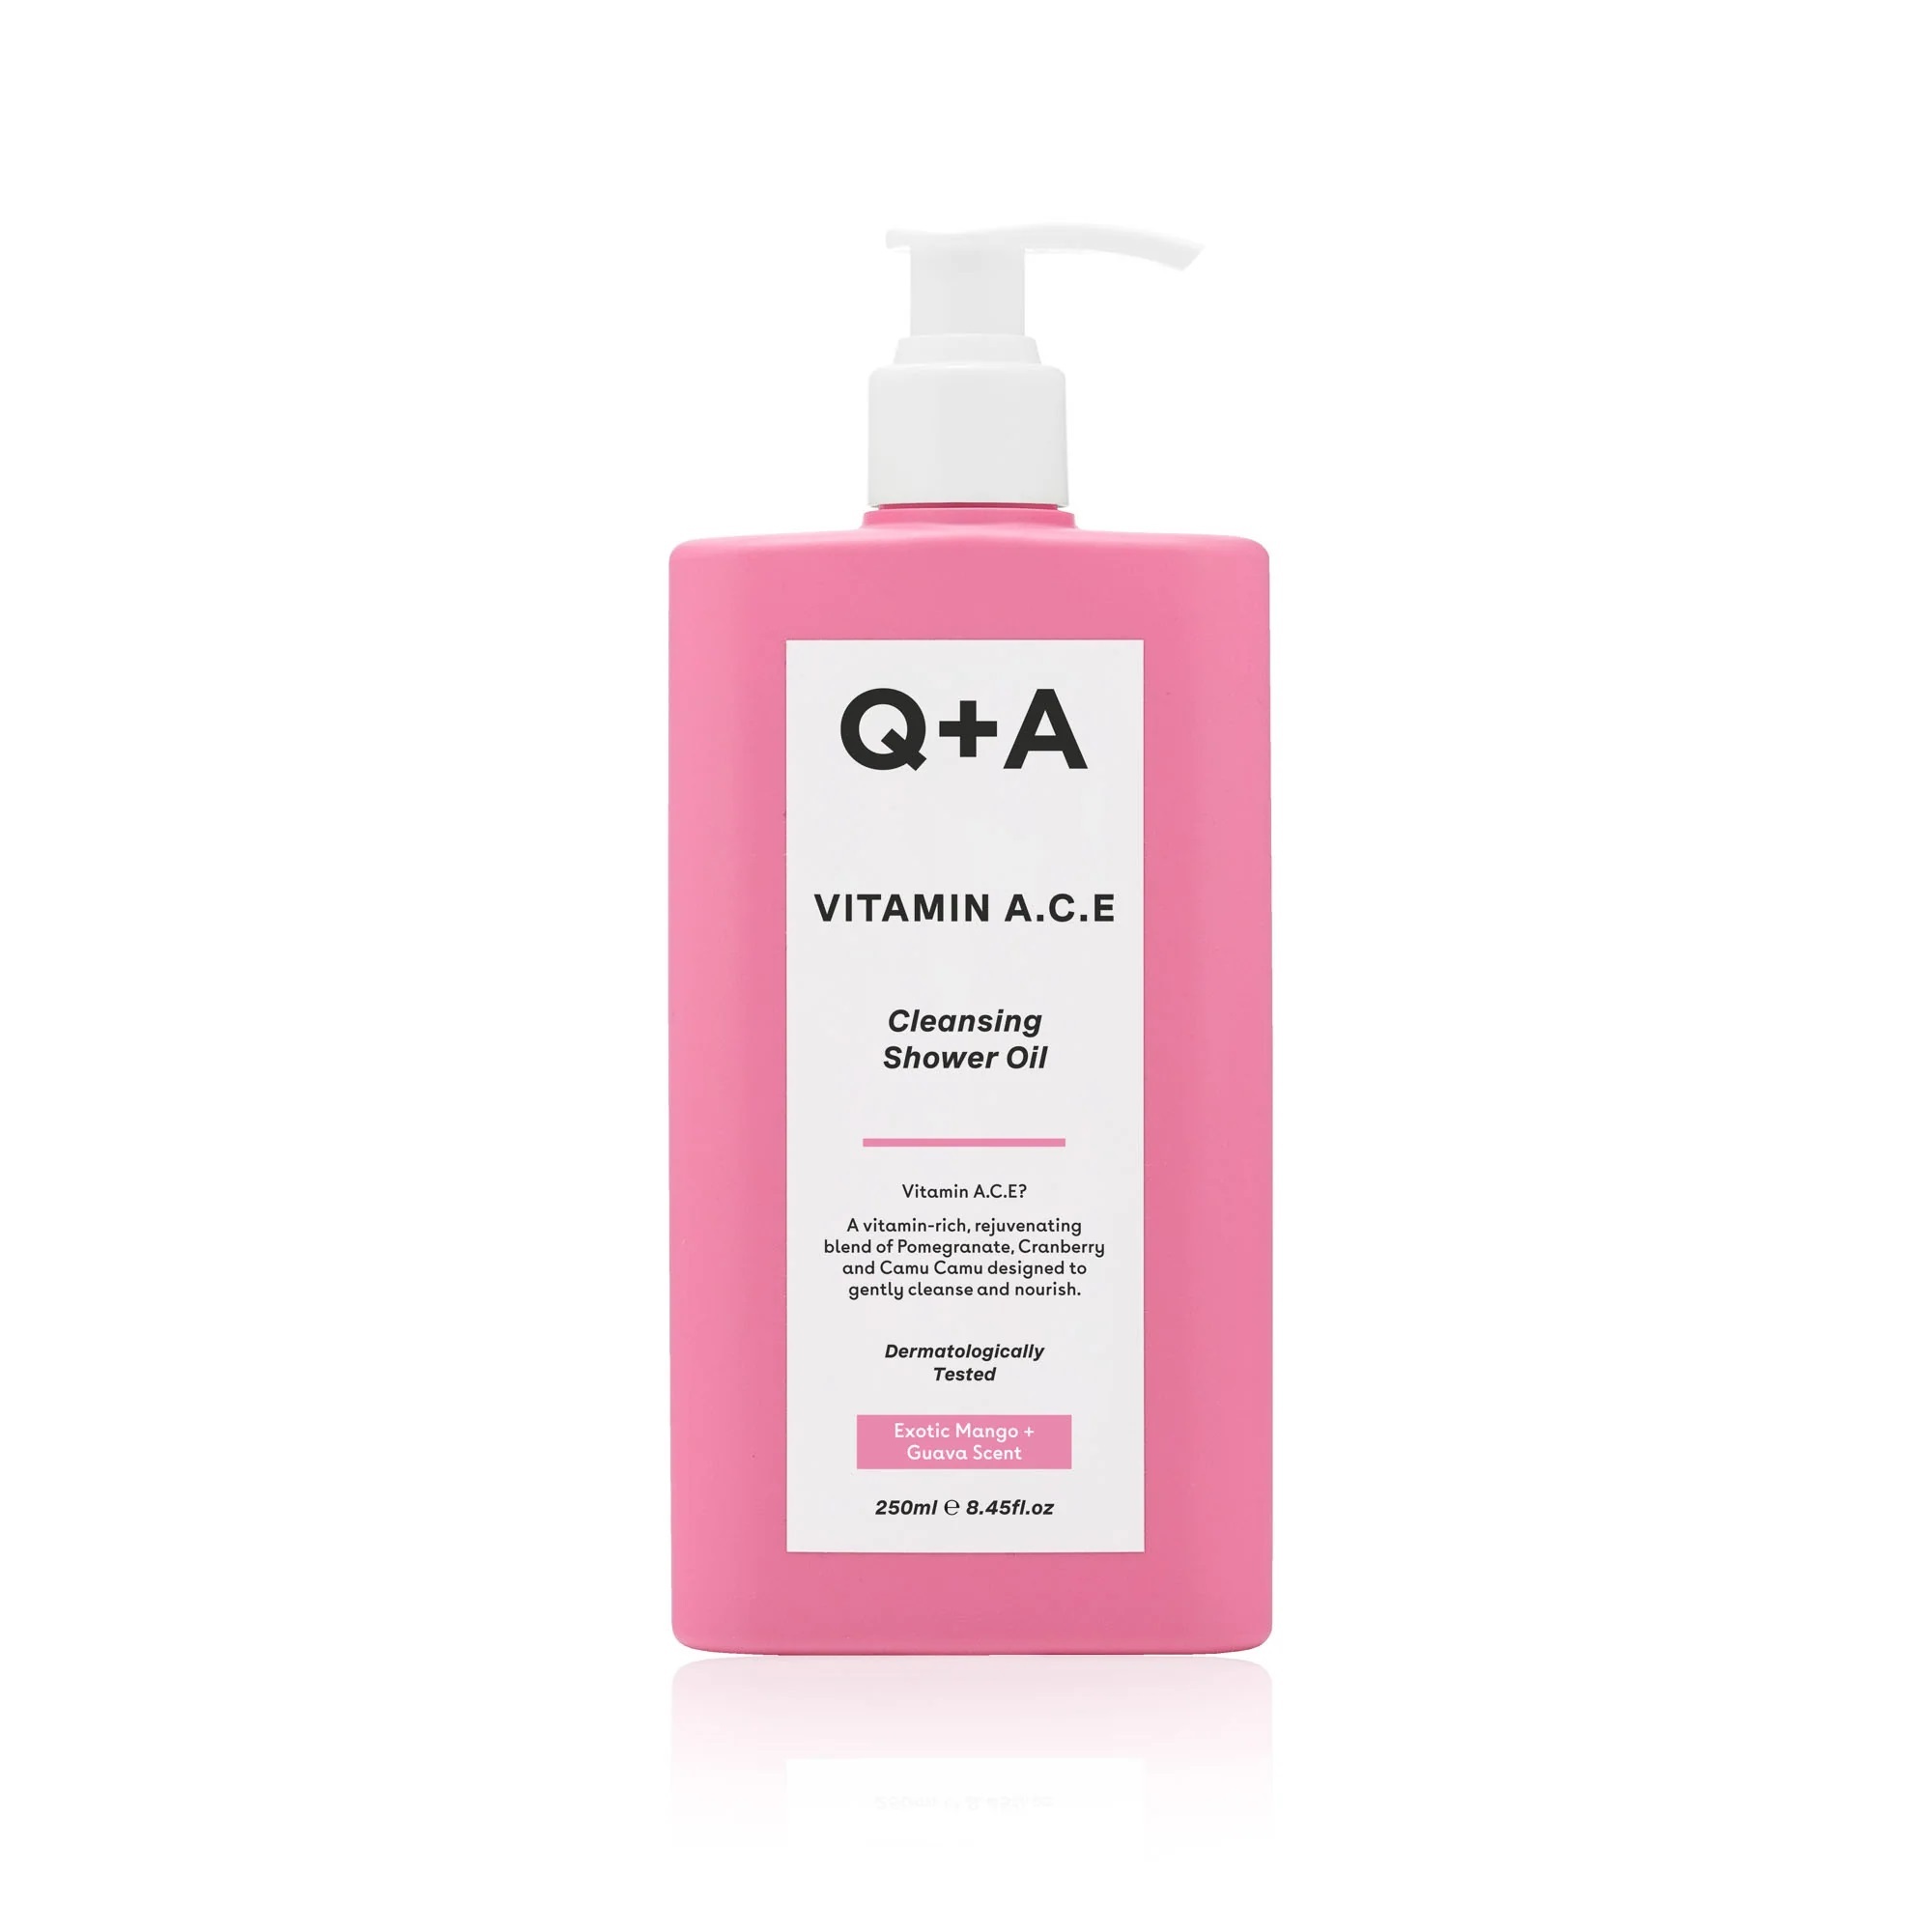 Q+A Sprchový olej s vitamínem A, C a E (Cleansing Shower Oil) 250 ml